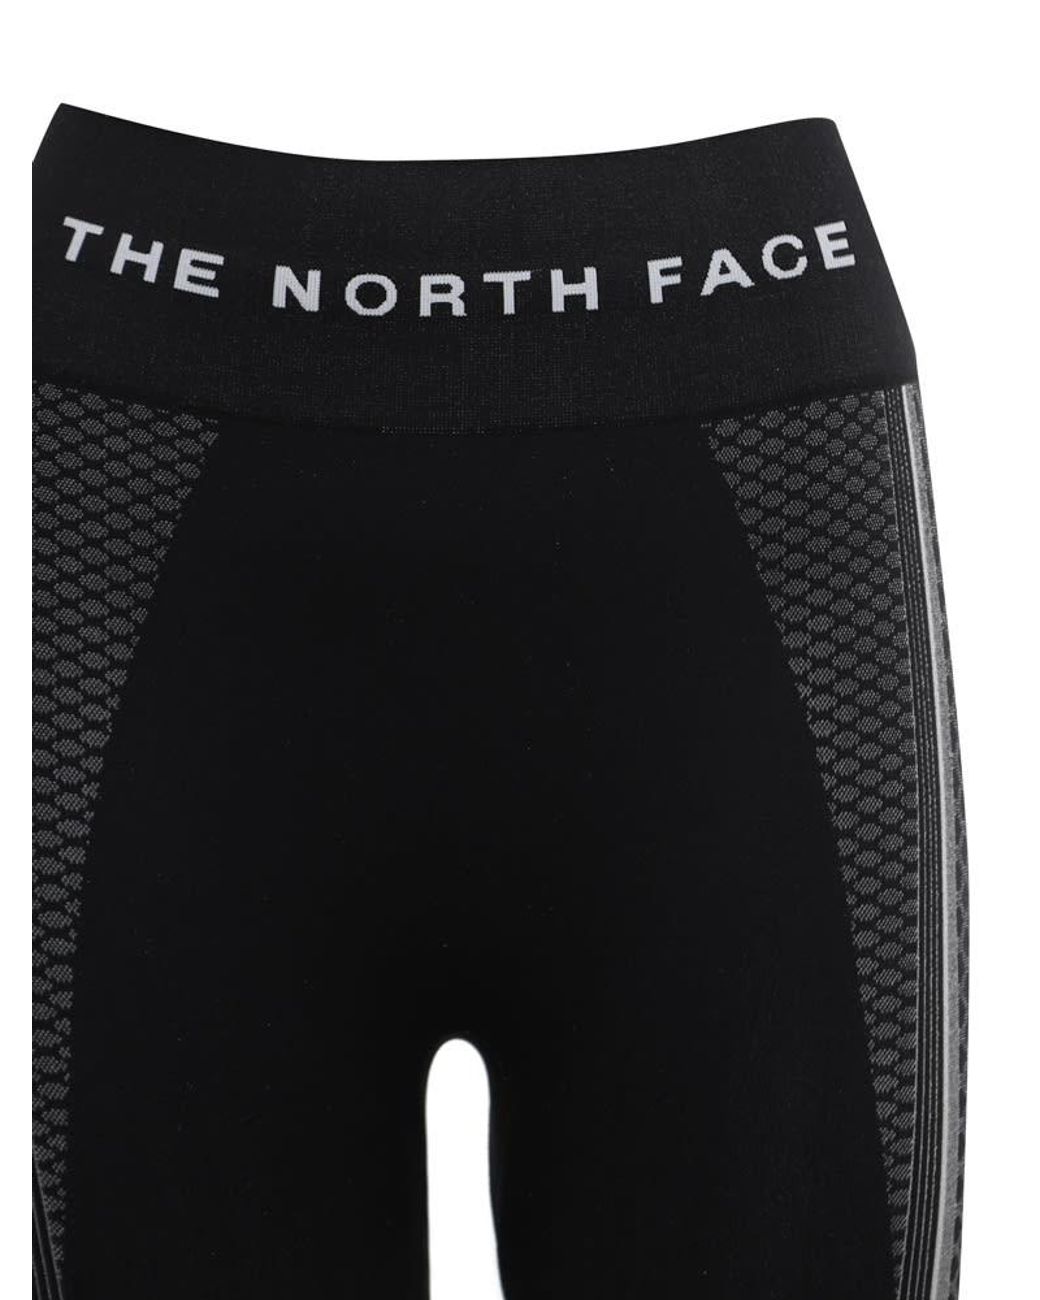 THE NORTH FACE Gartha Legging - Black